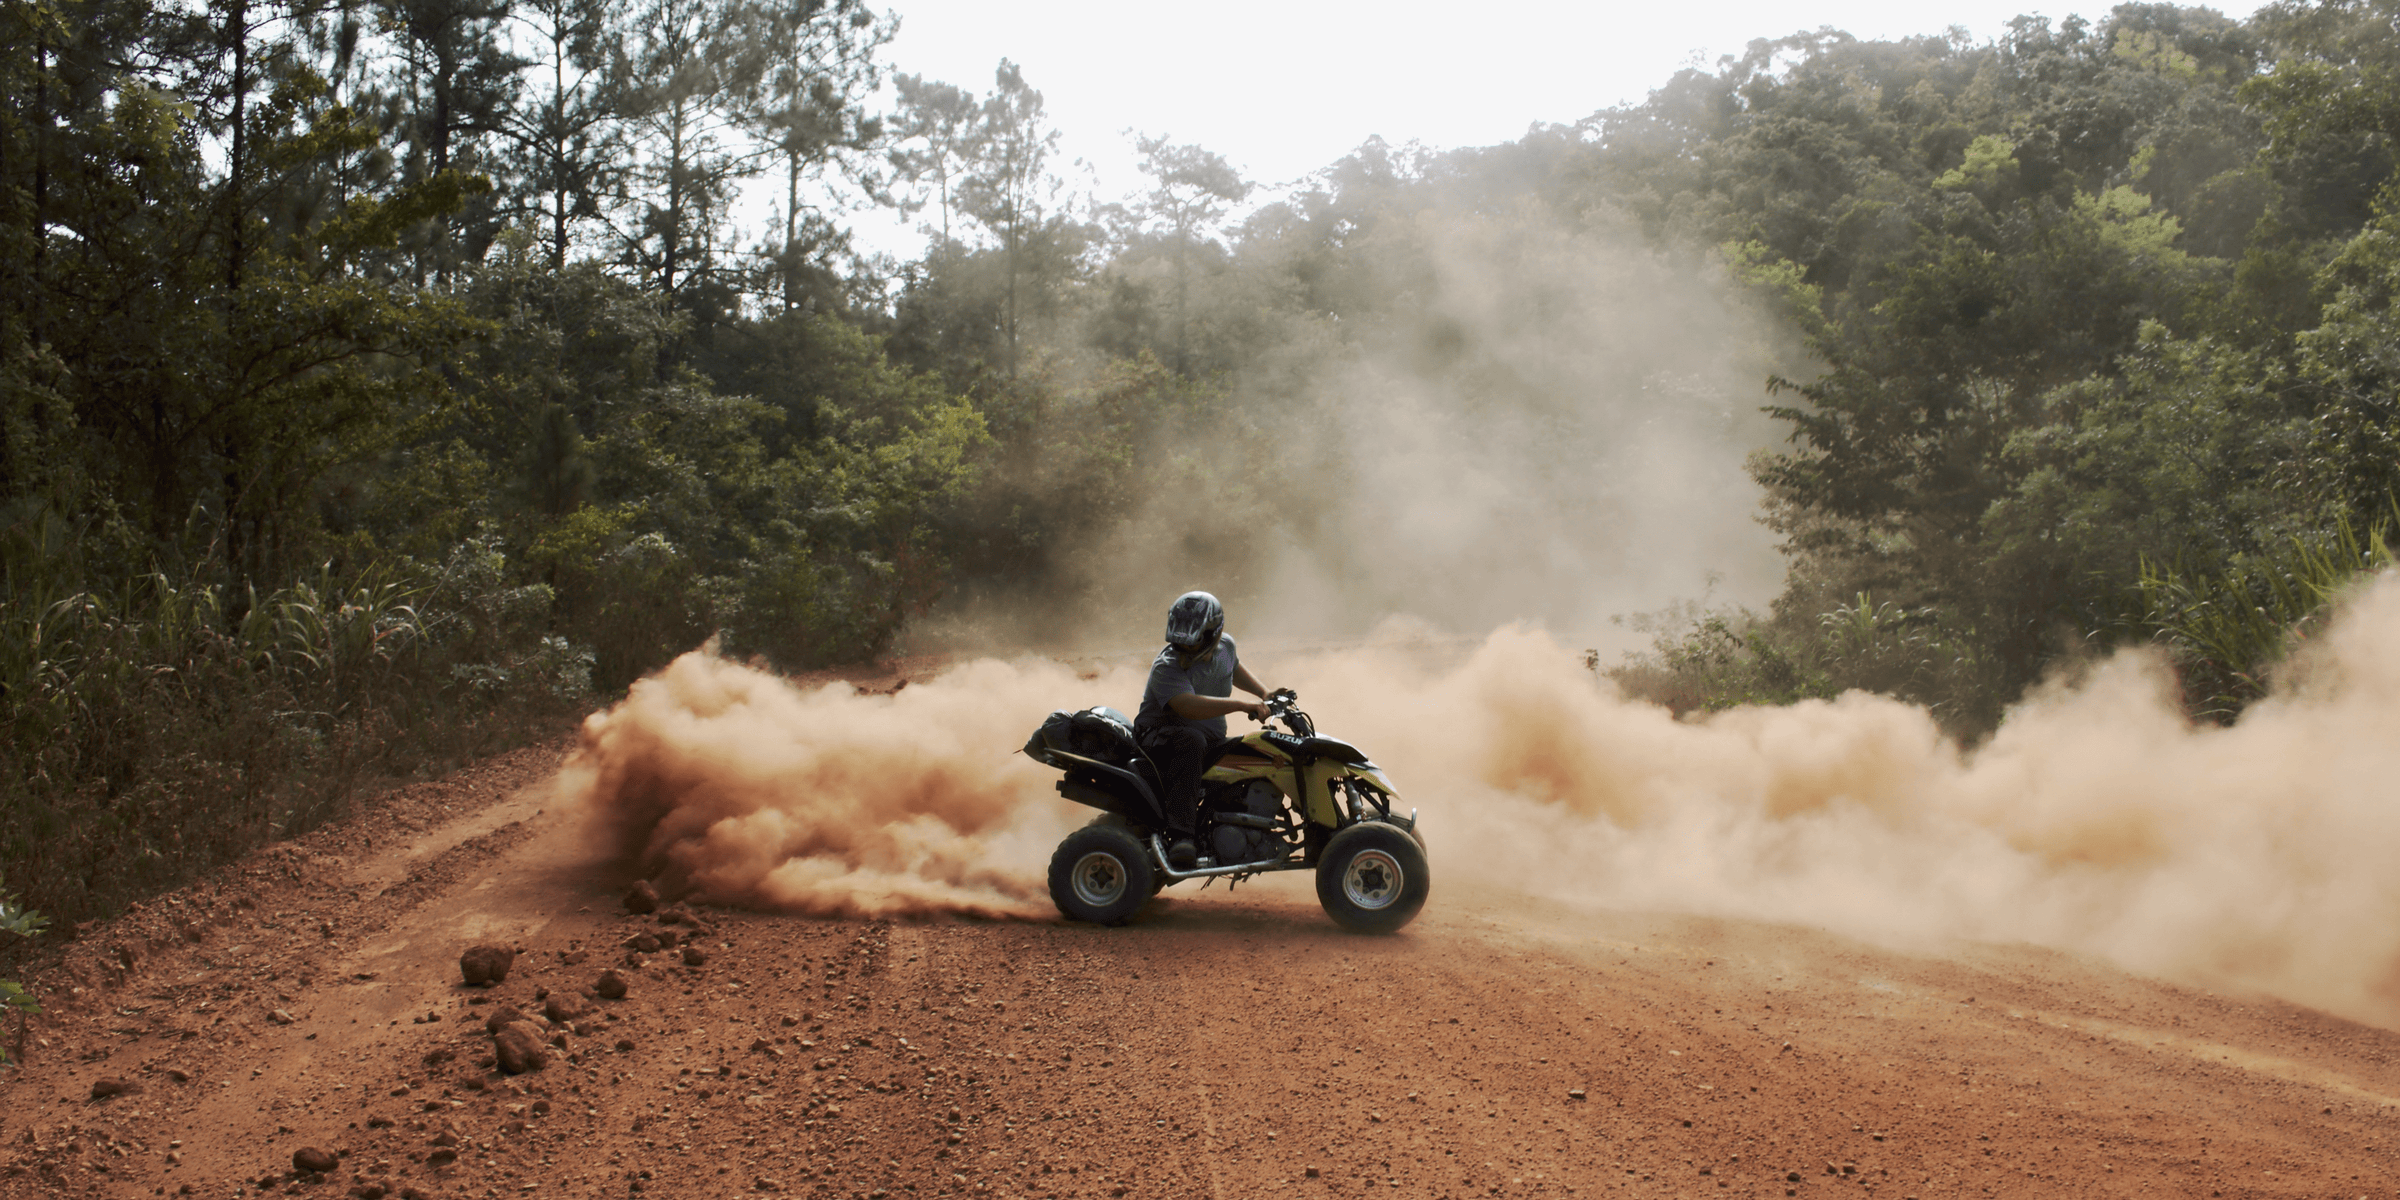 ATV riding on a dirt track